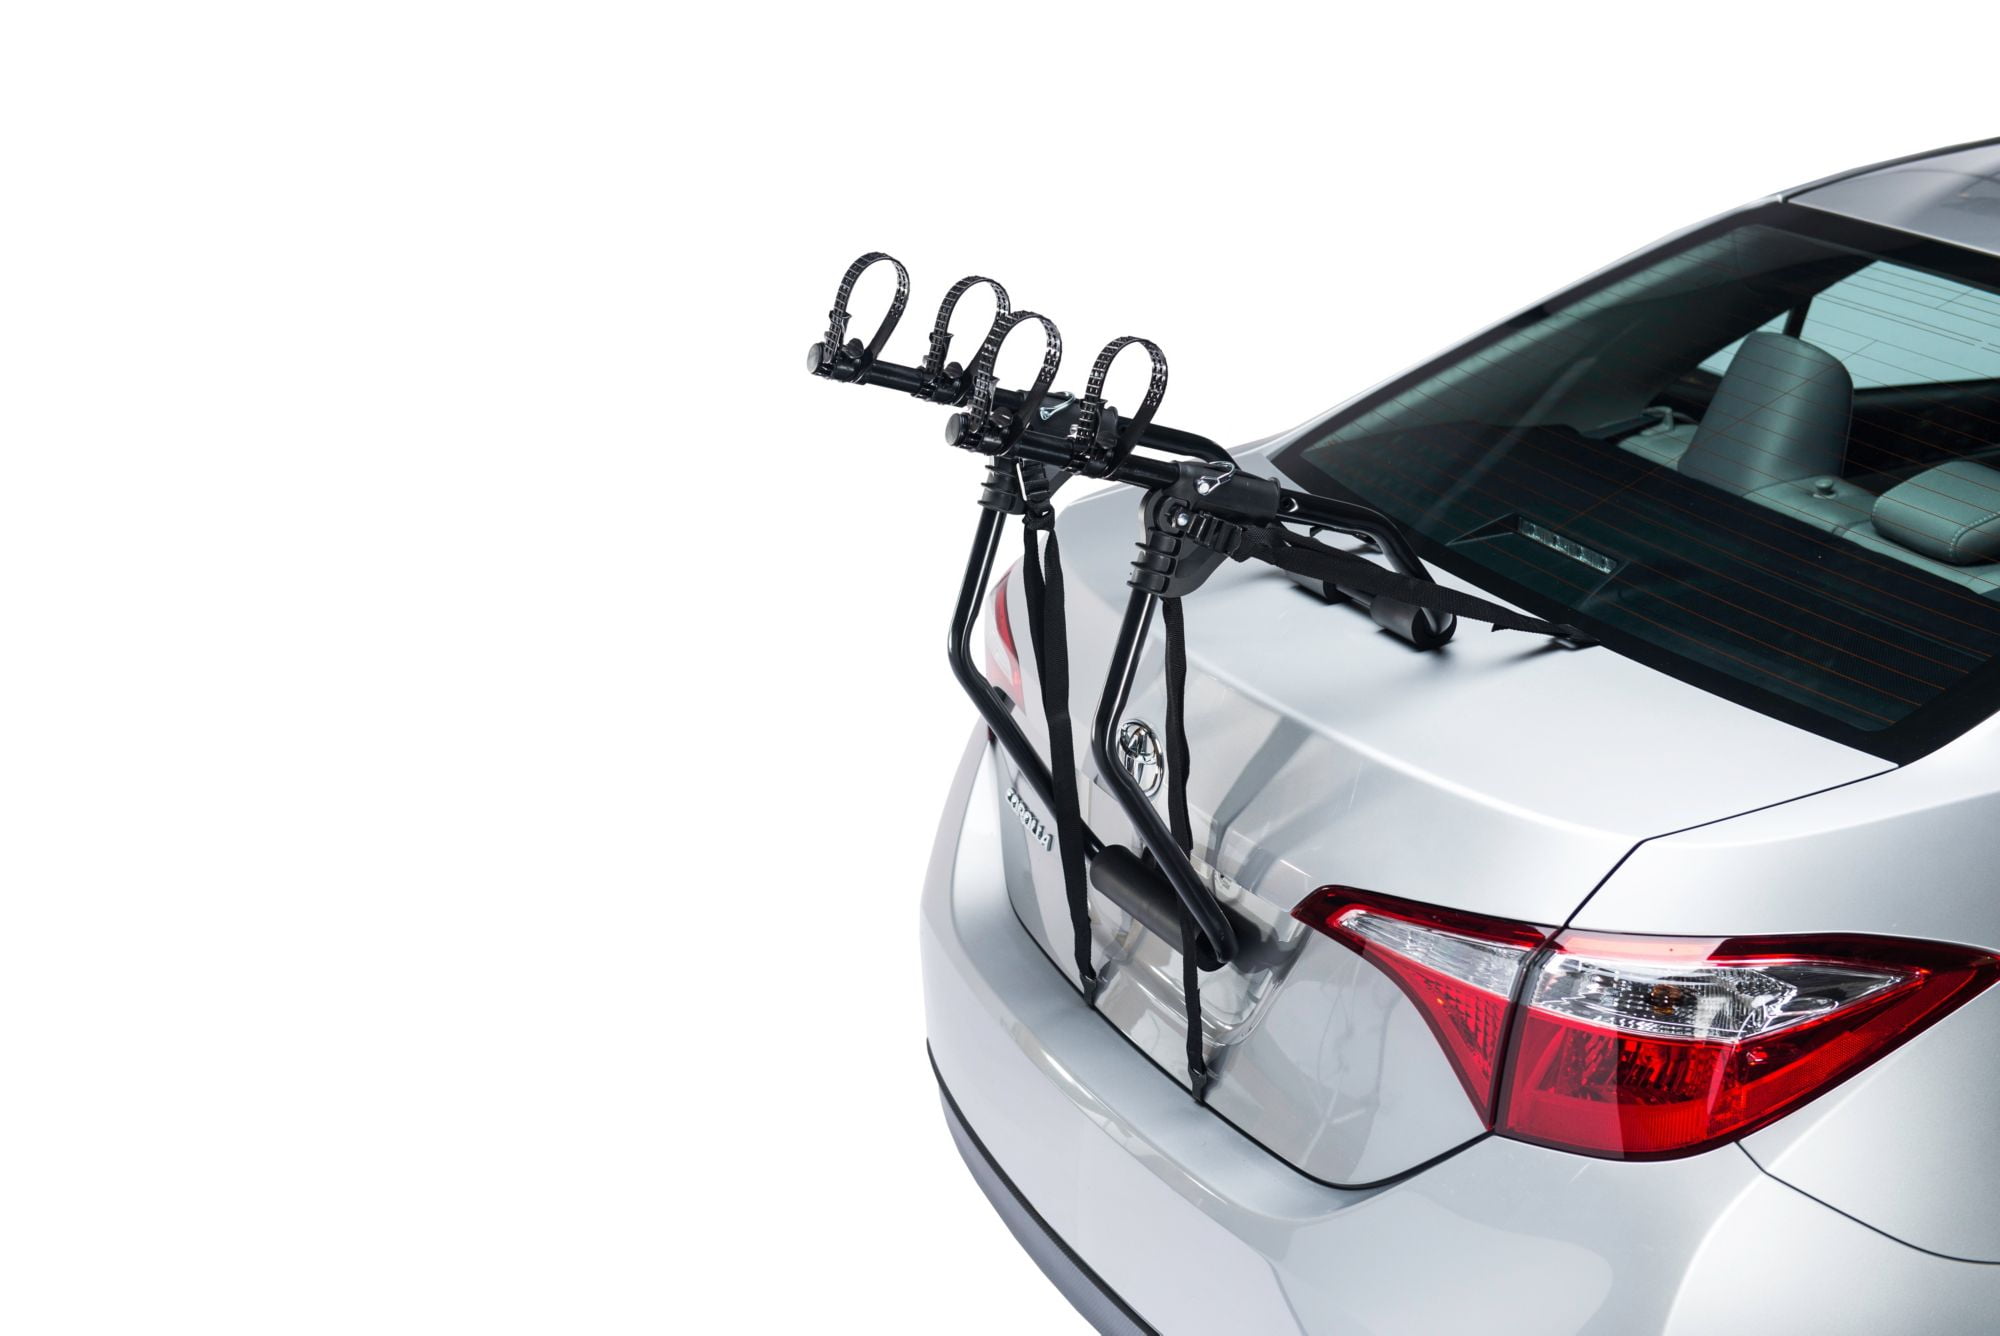 walmart bike rack for car trunk